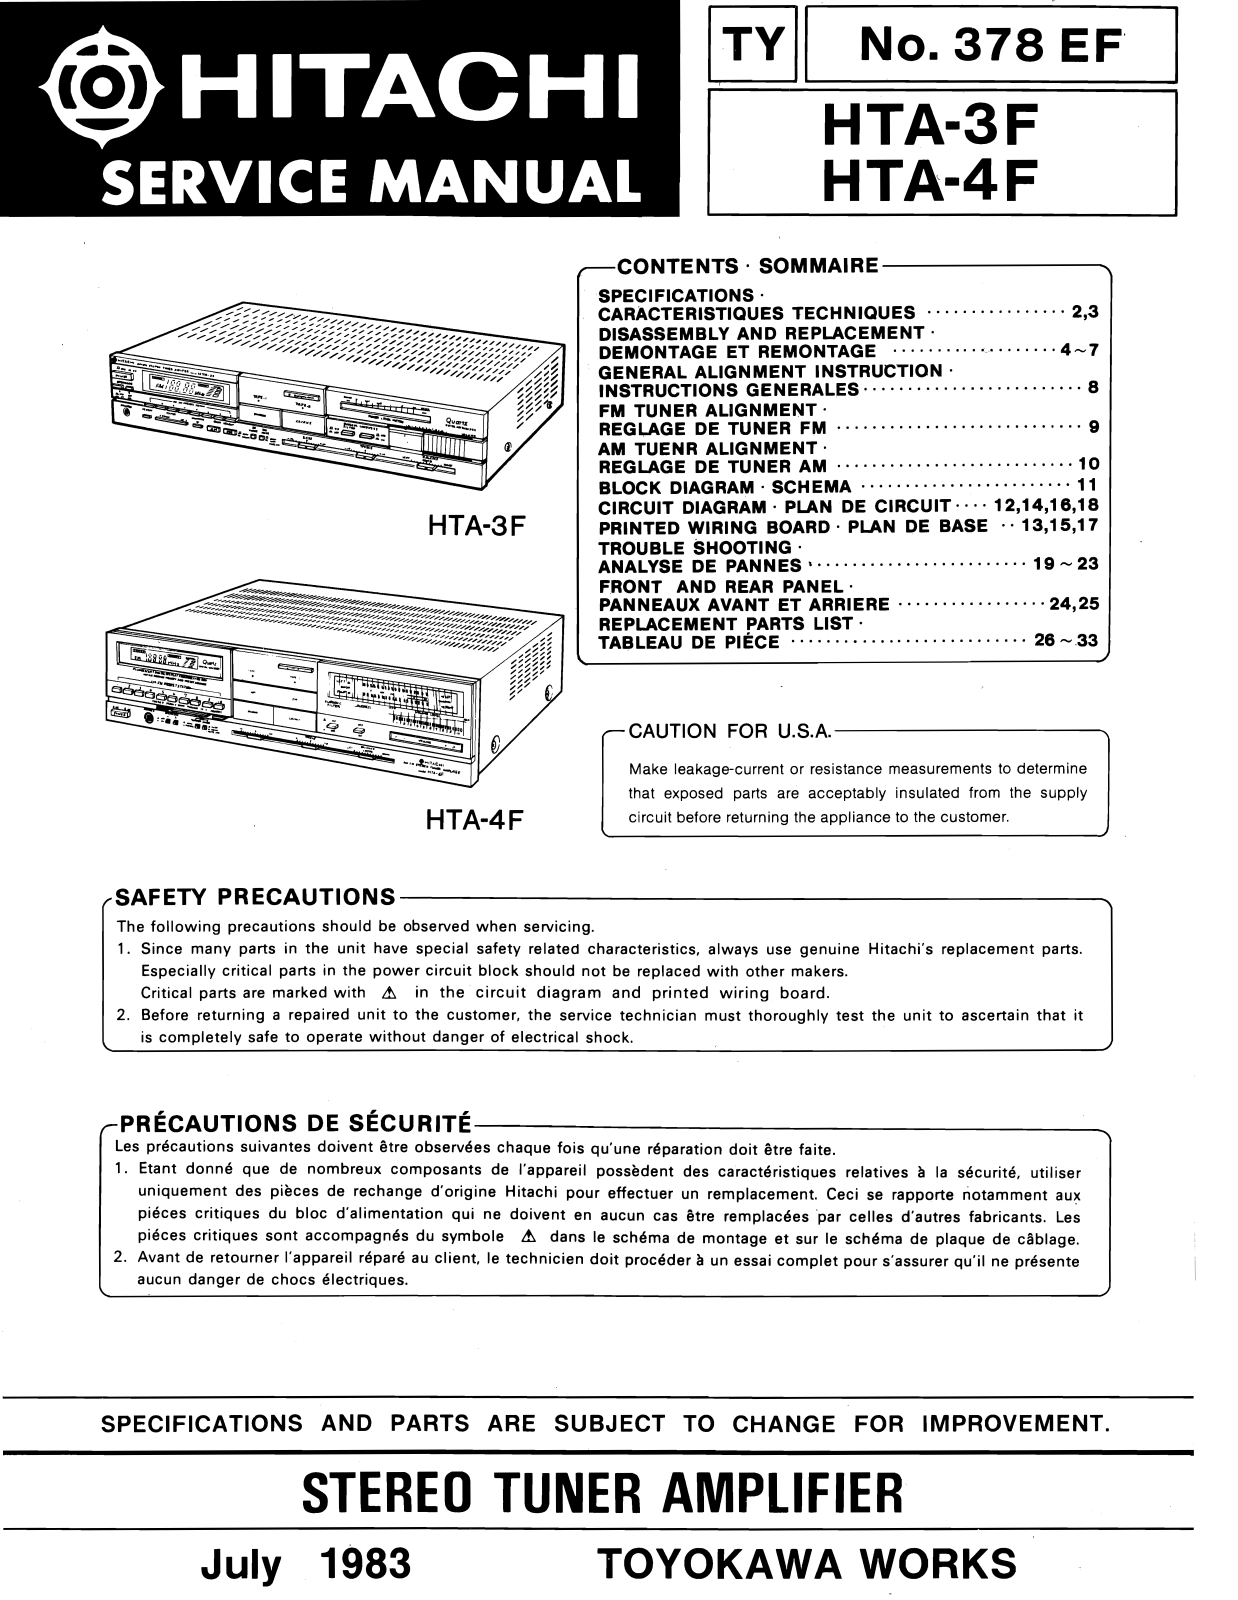 Hitachi HT-A4-F Service Manual